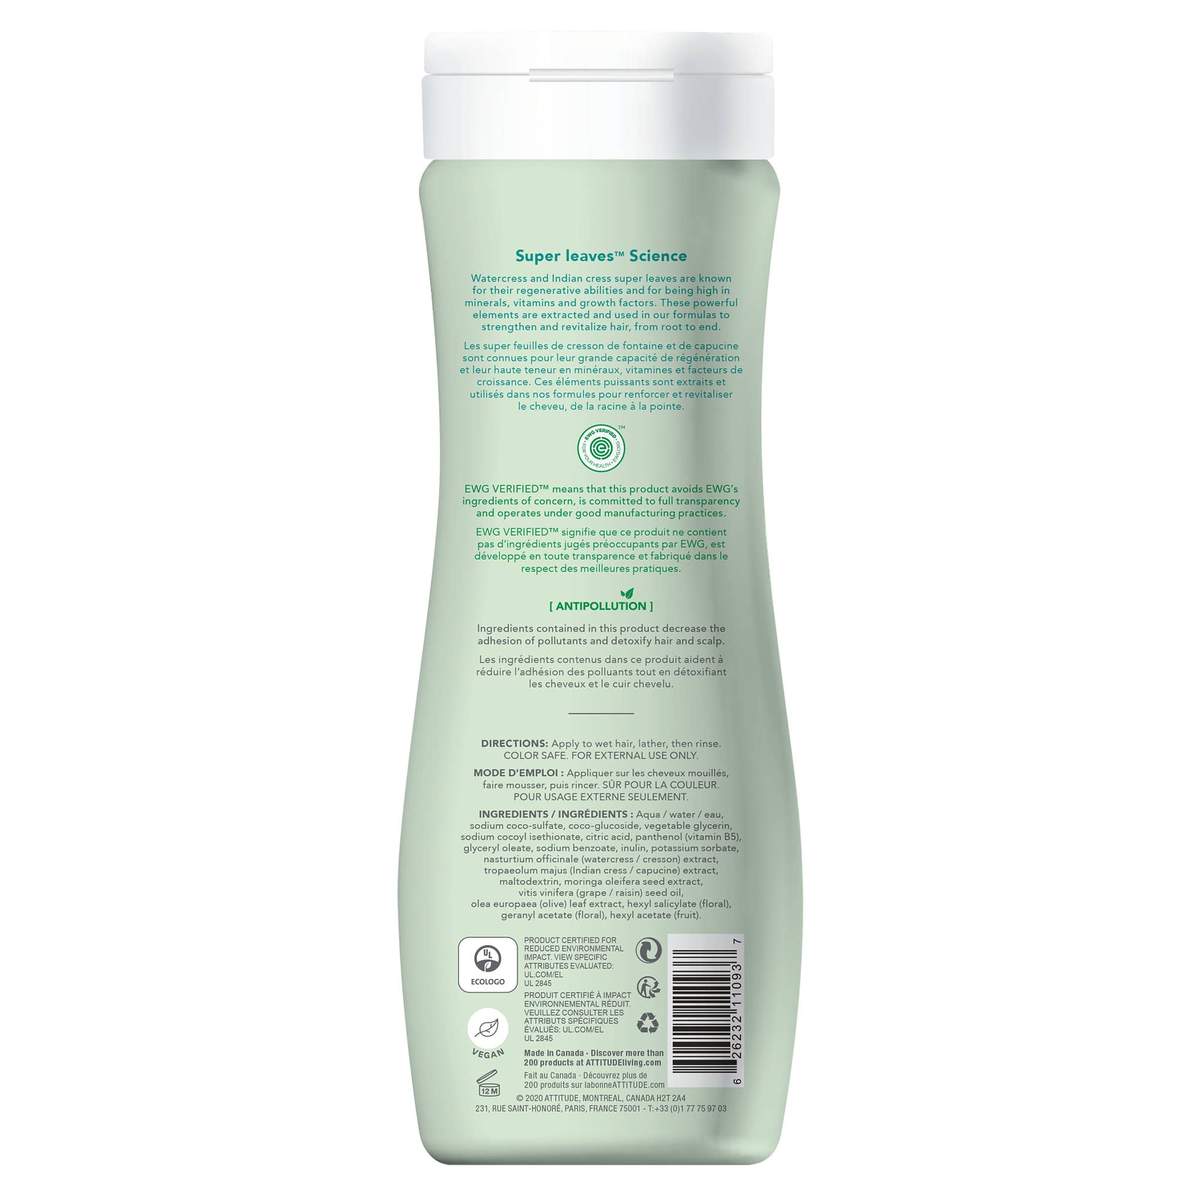 Shampoo Natural Nutre y Fortalece 473ml